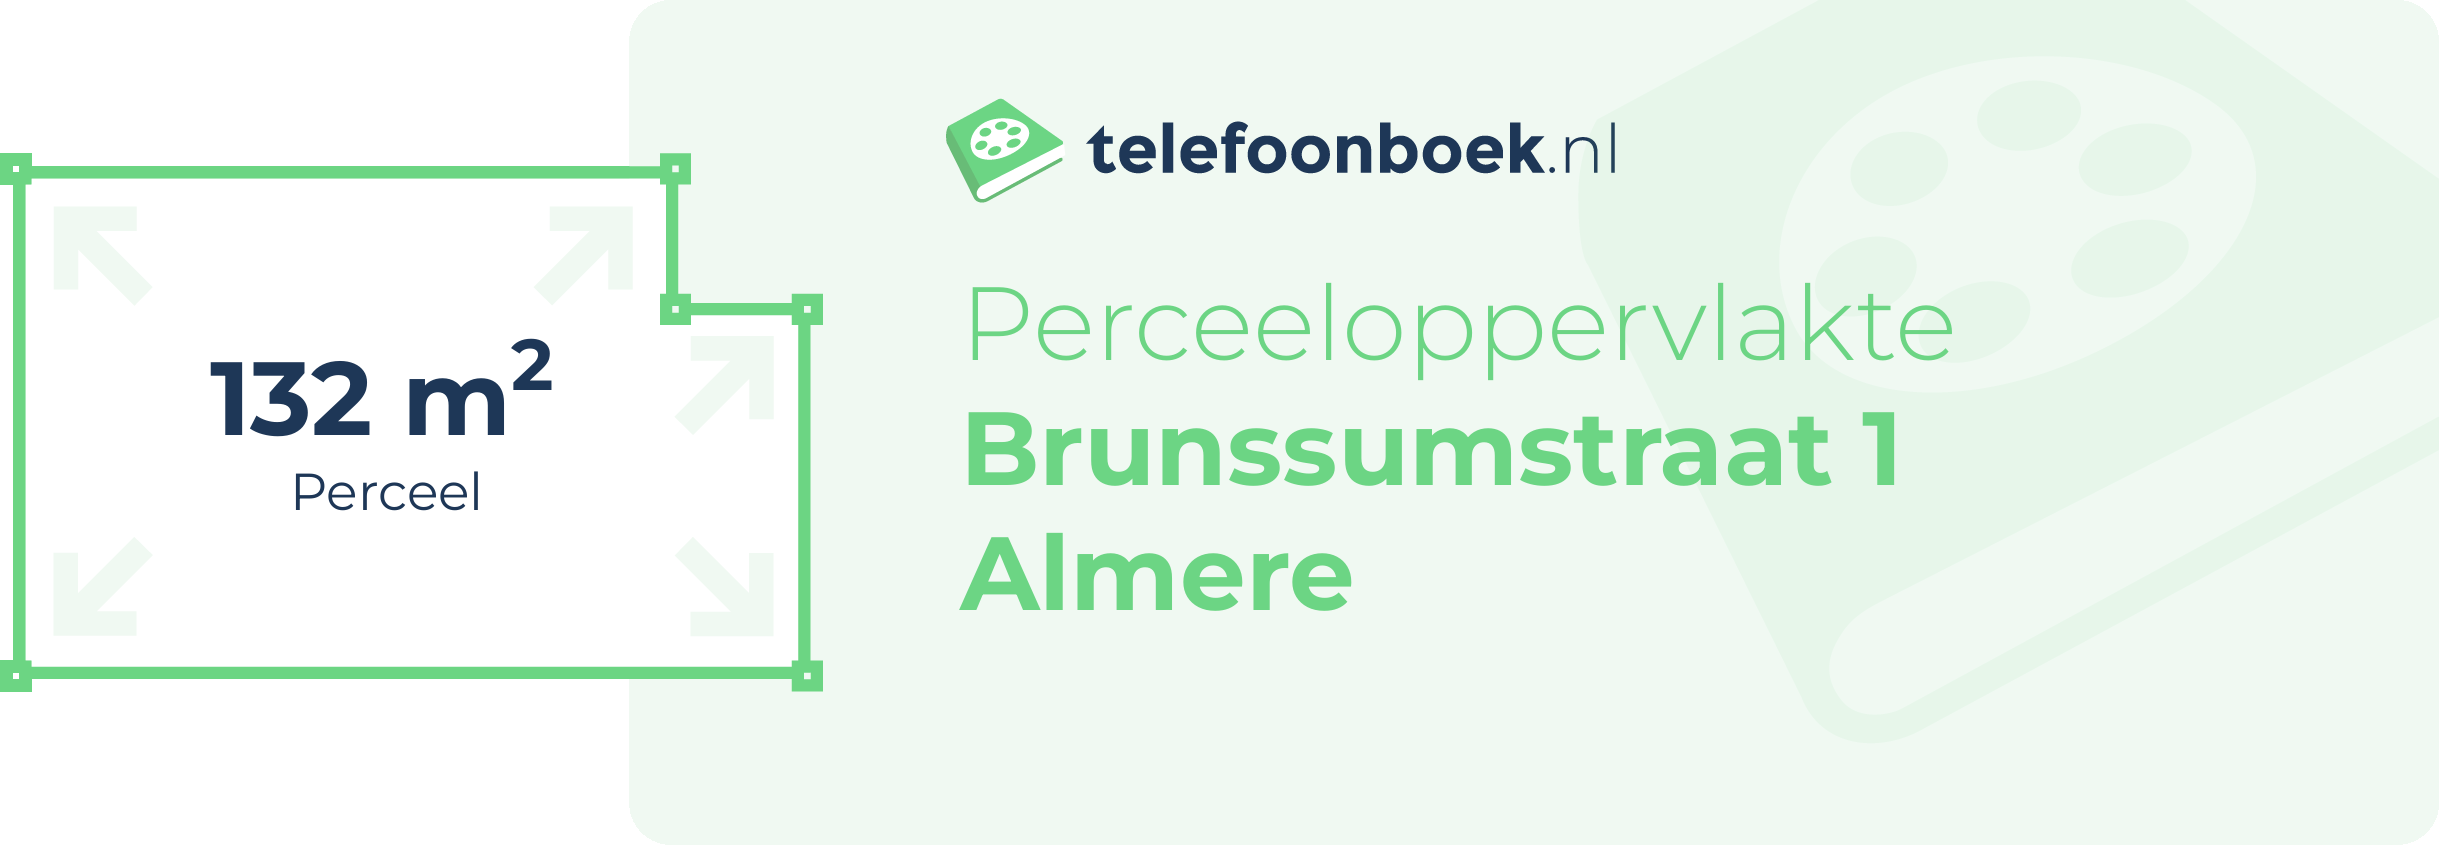 Perceeloppervlakte Brunssumstraat 1 Almere